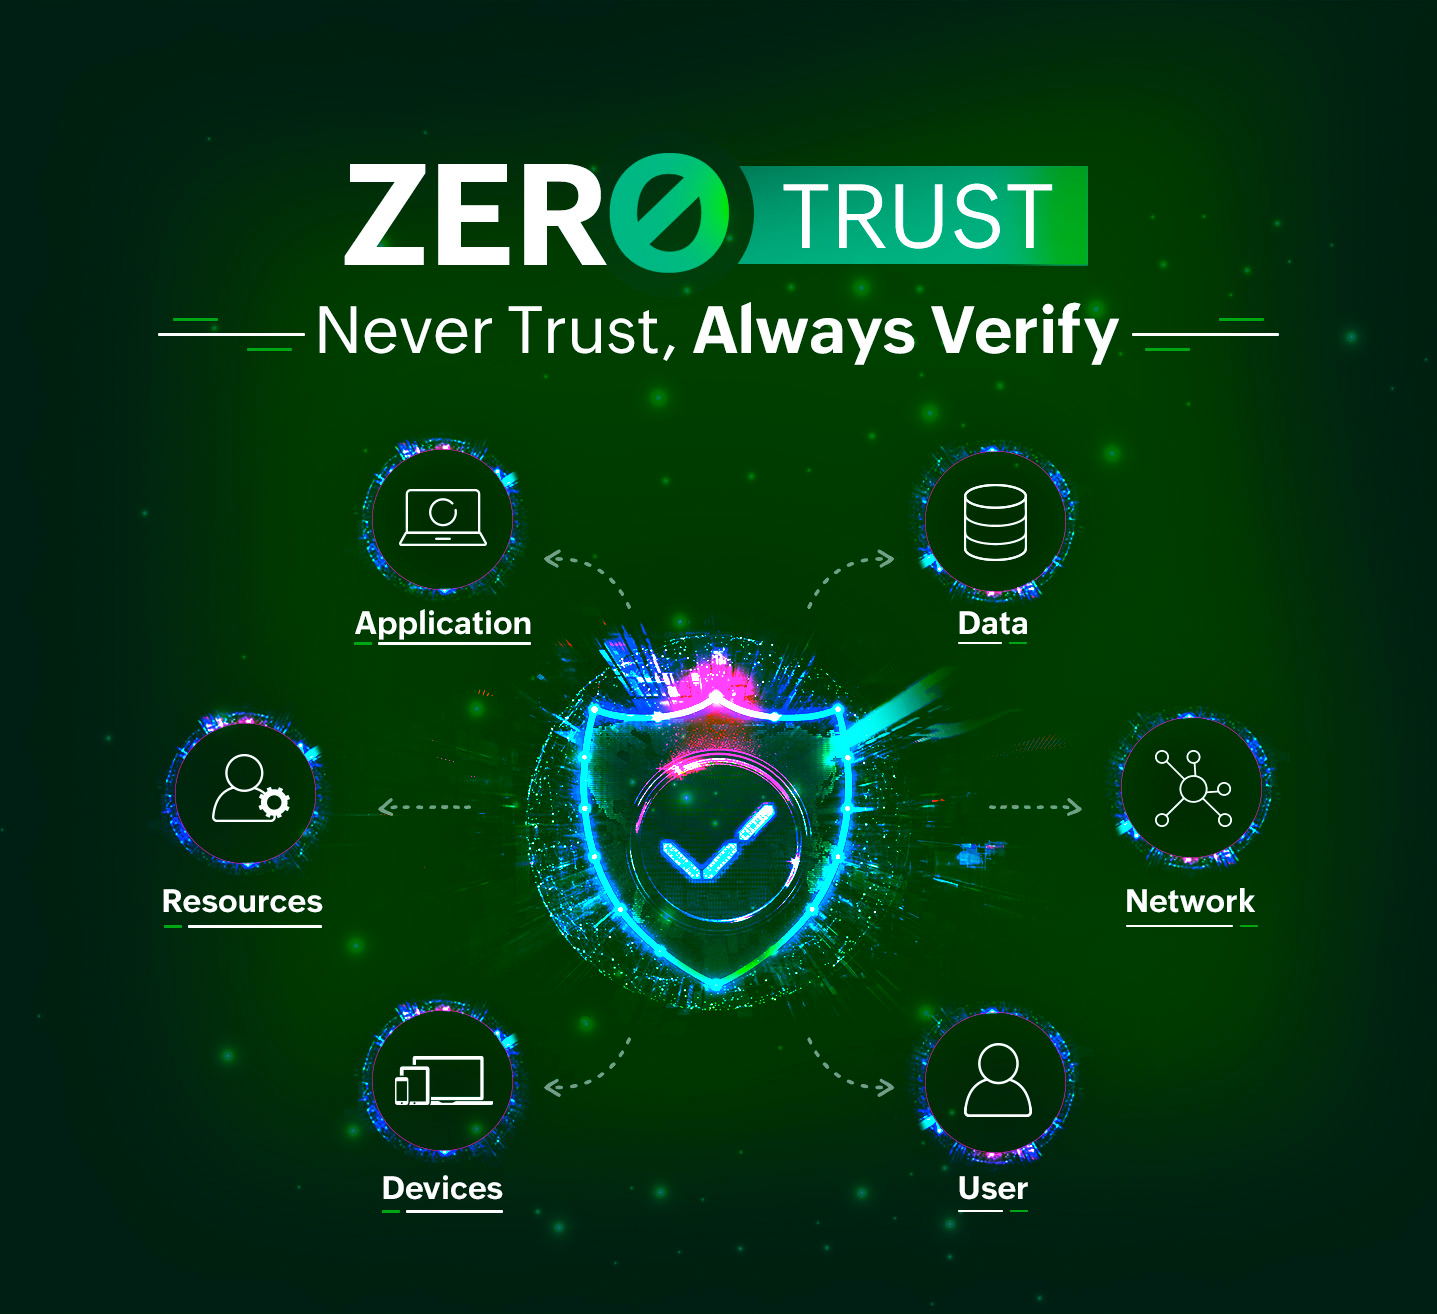 Zero Trust: The journey towards a secure network